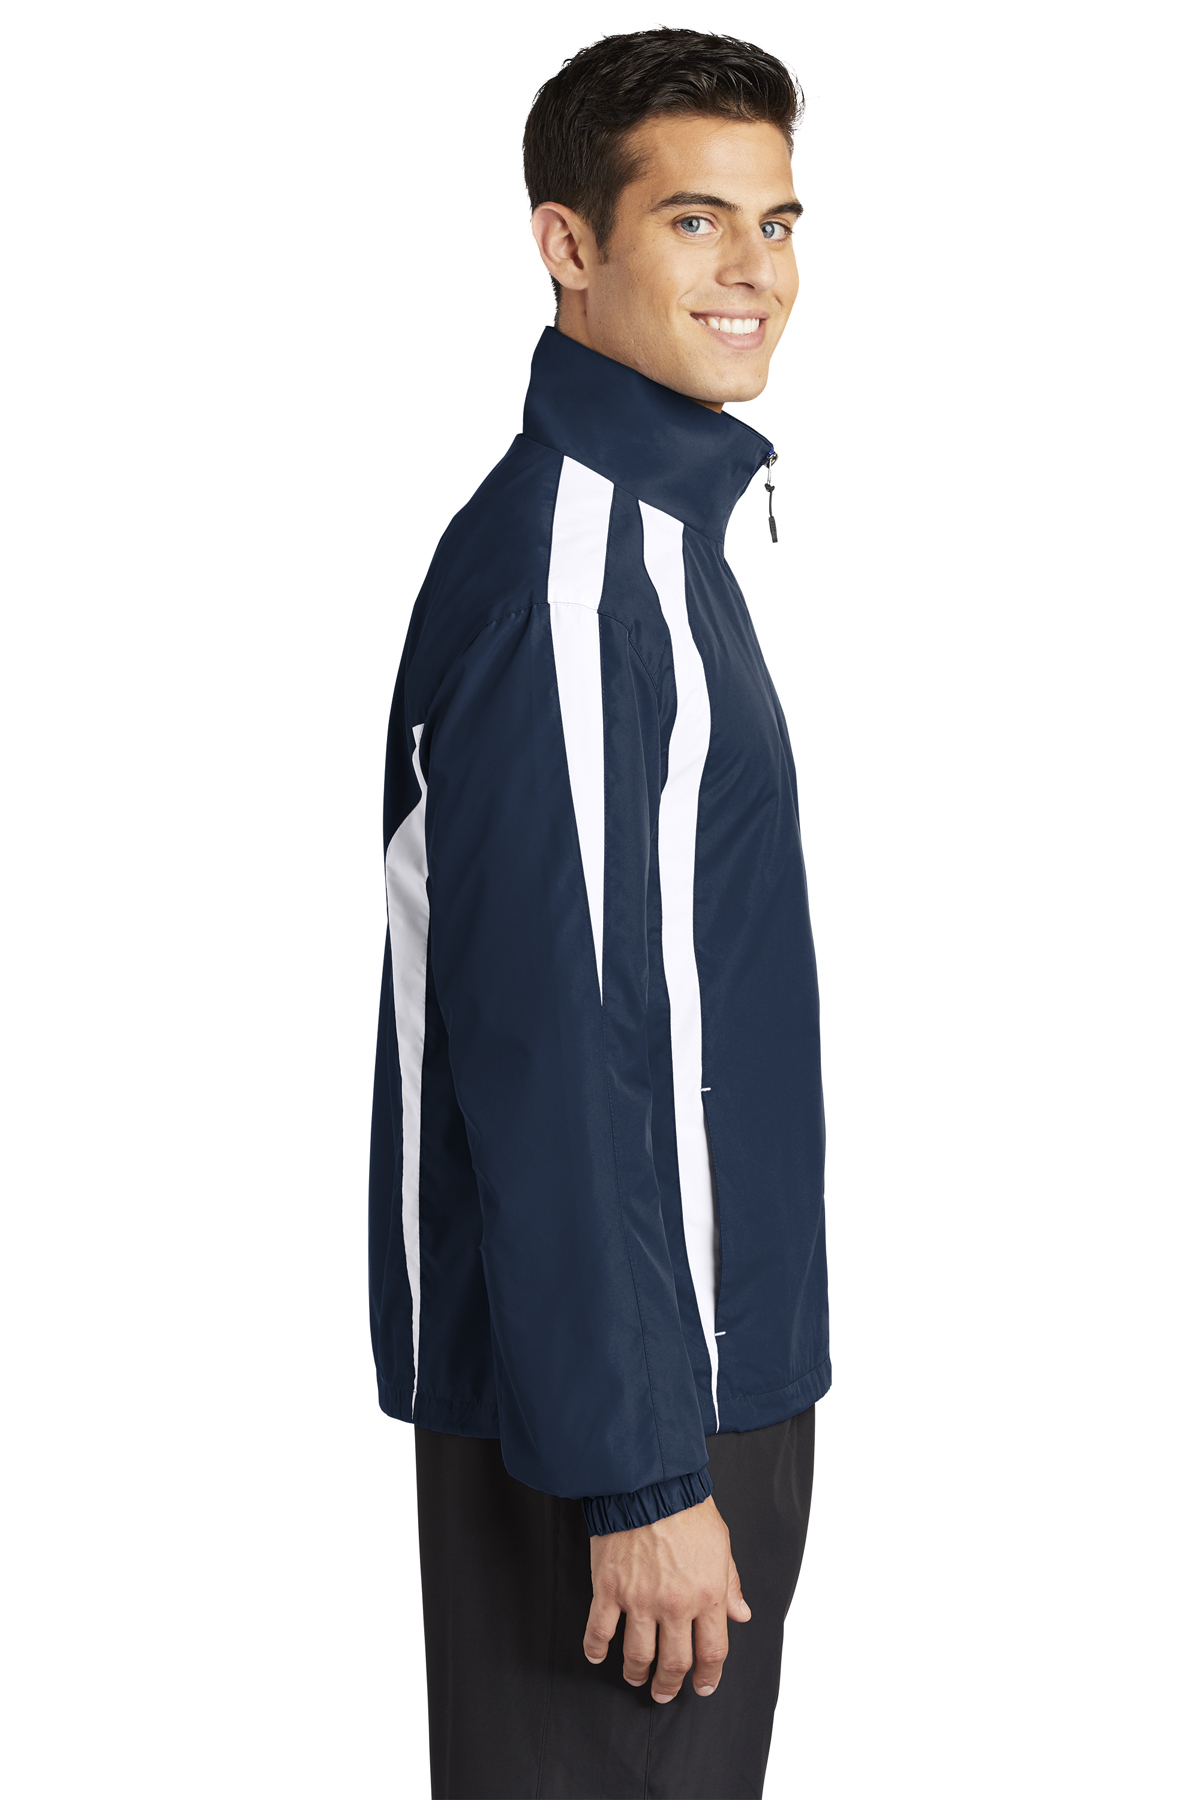 Sport-Tek Colorblock Raglan Jacket | Product | Sport-Tek